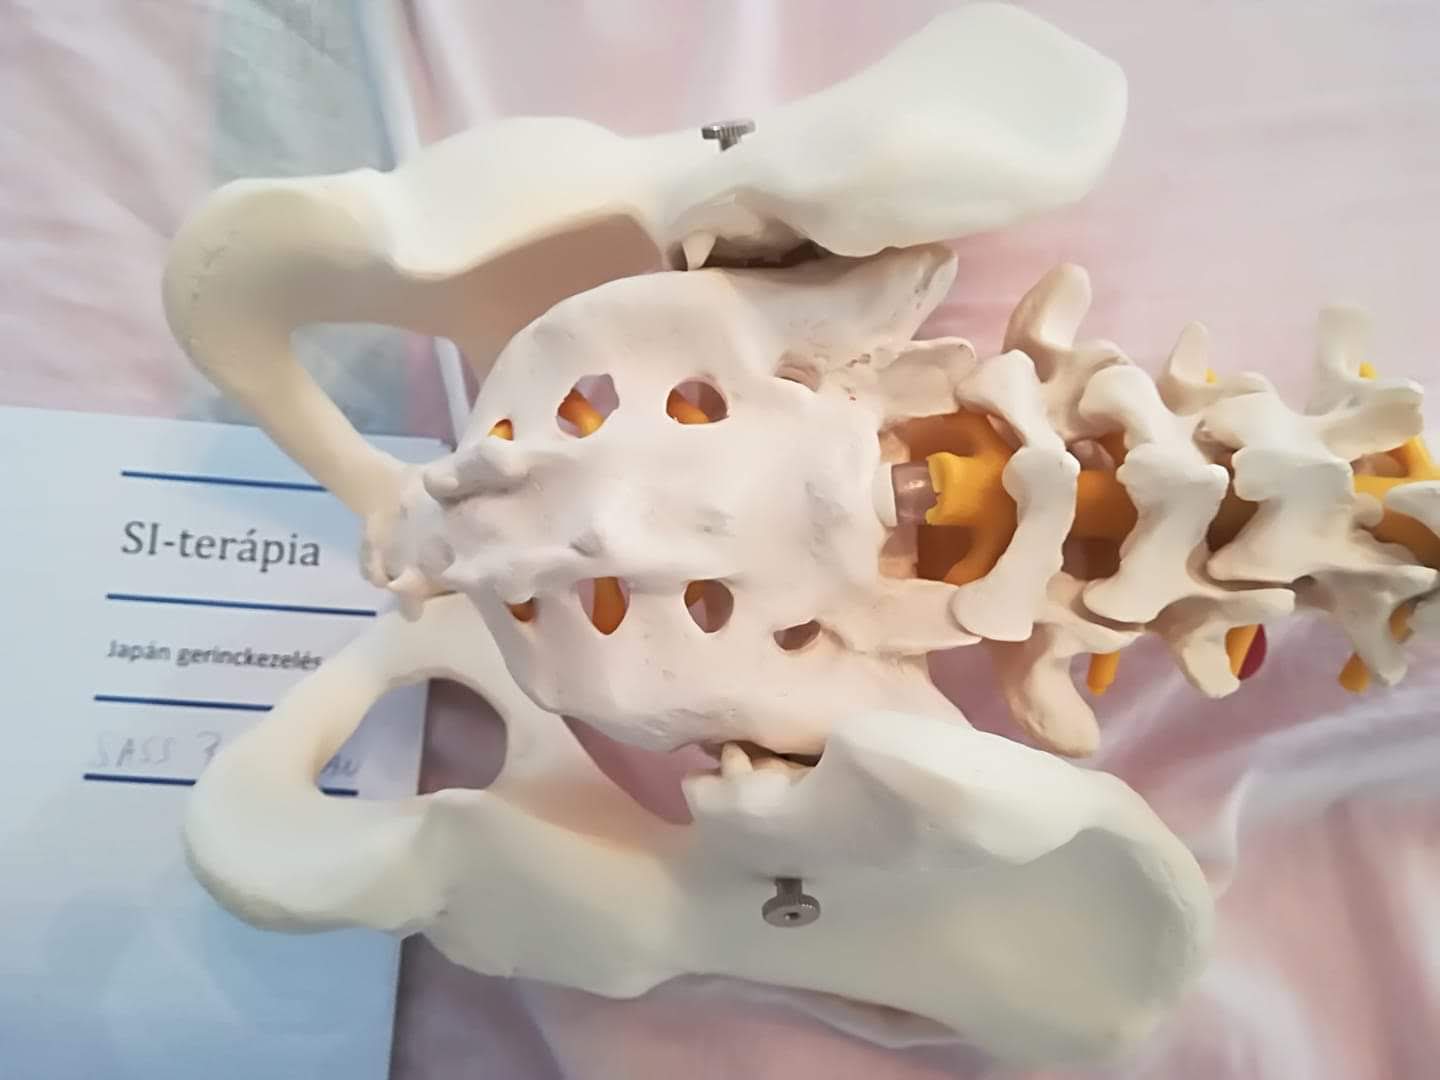 fokú talonavicularis ízületek osteoarthritis